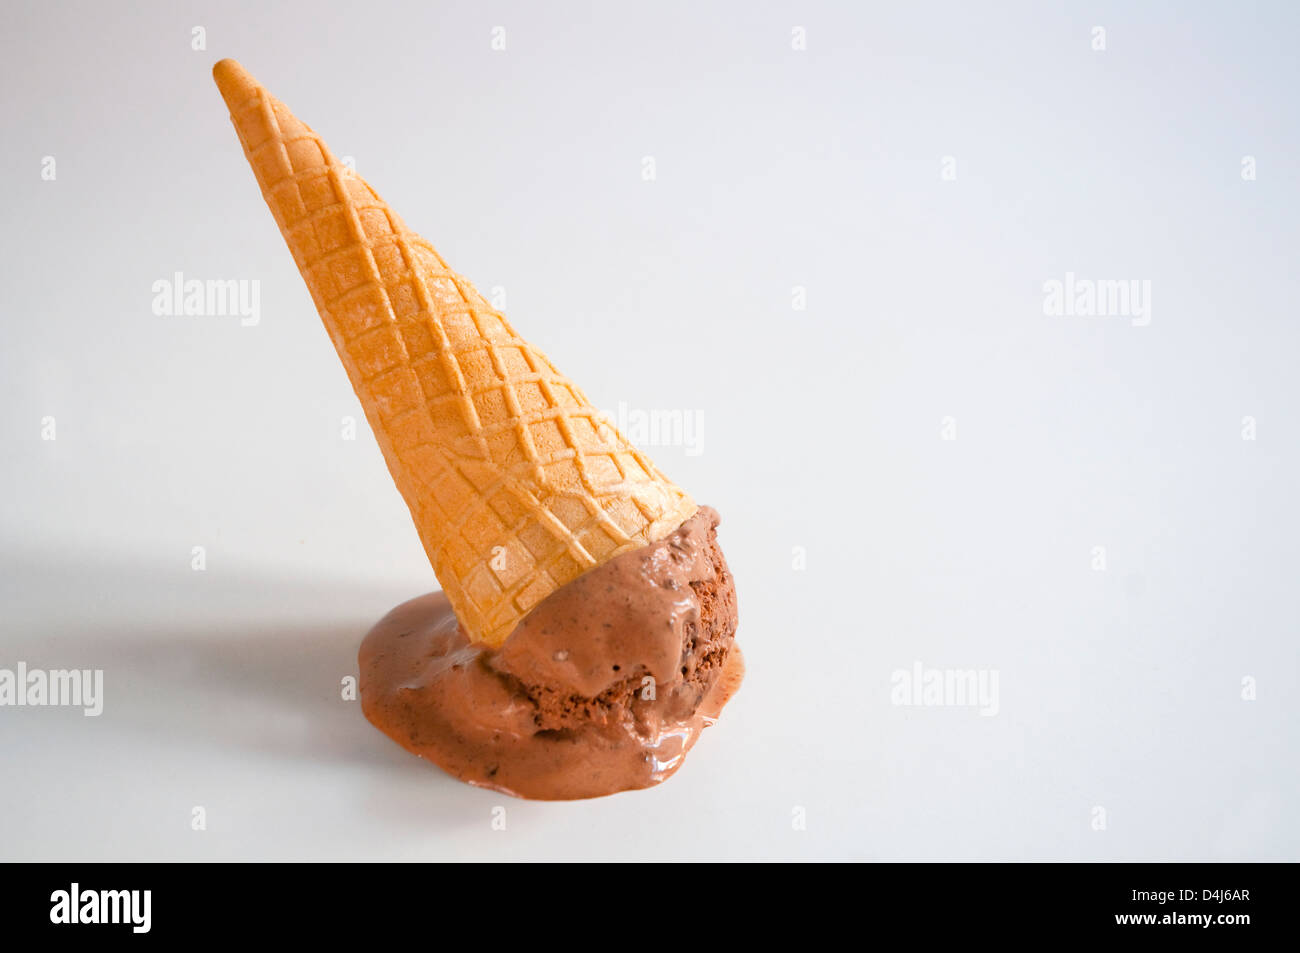 Cone of chocolate ice cream turned upside down. Stock Photo